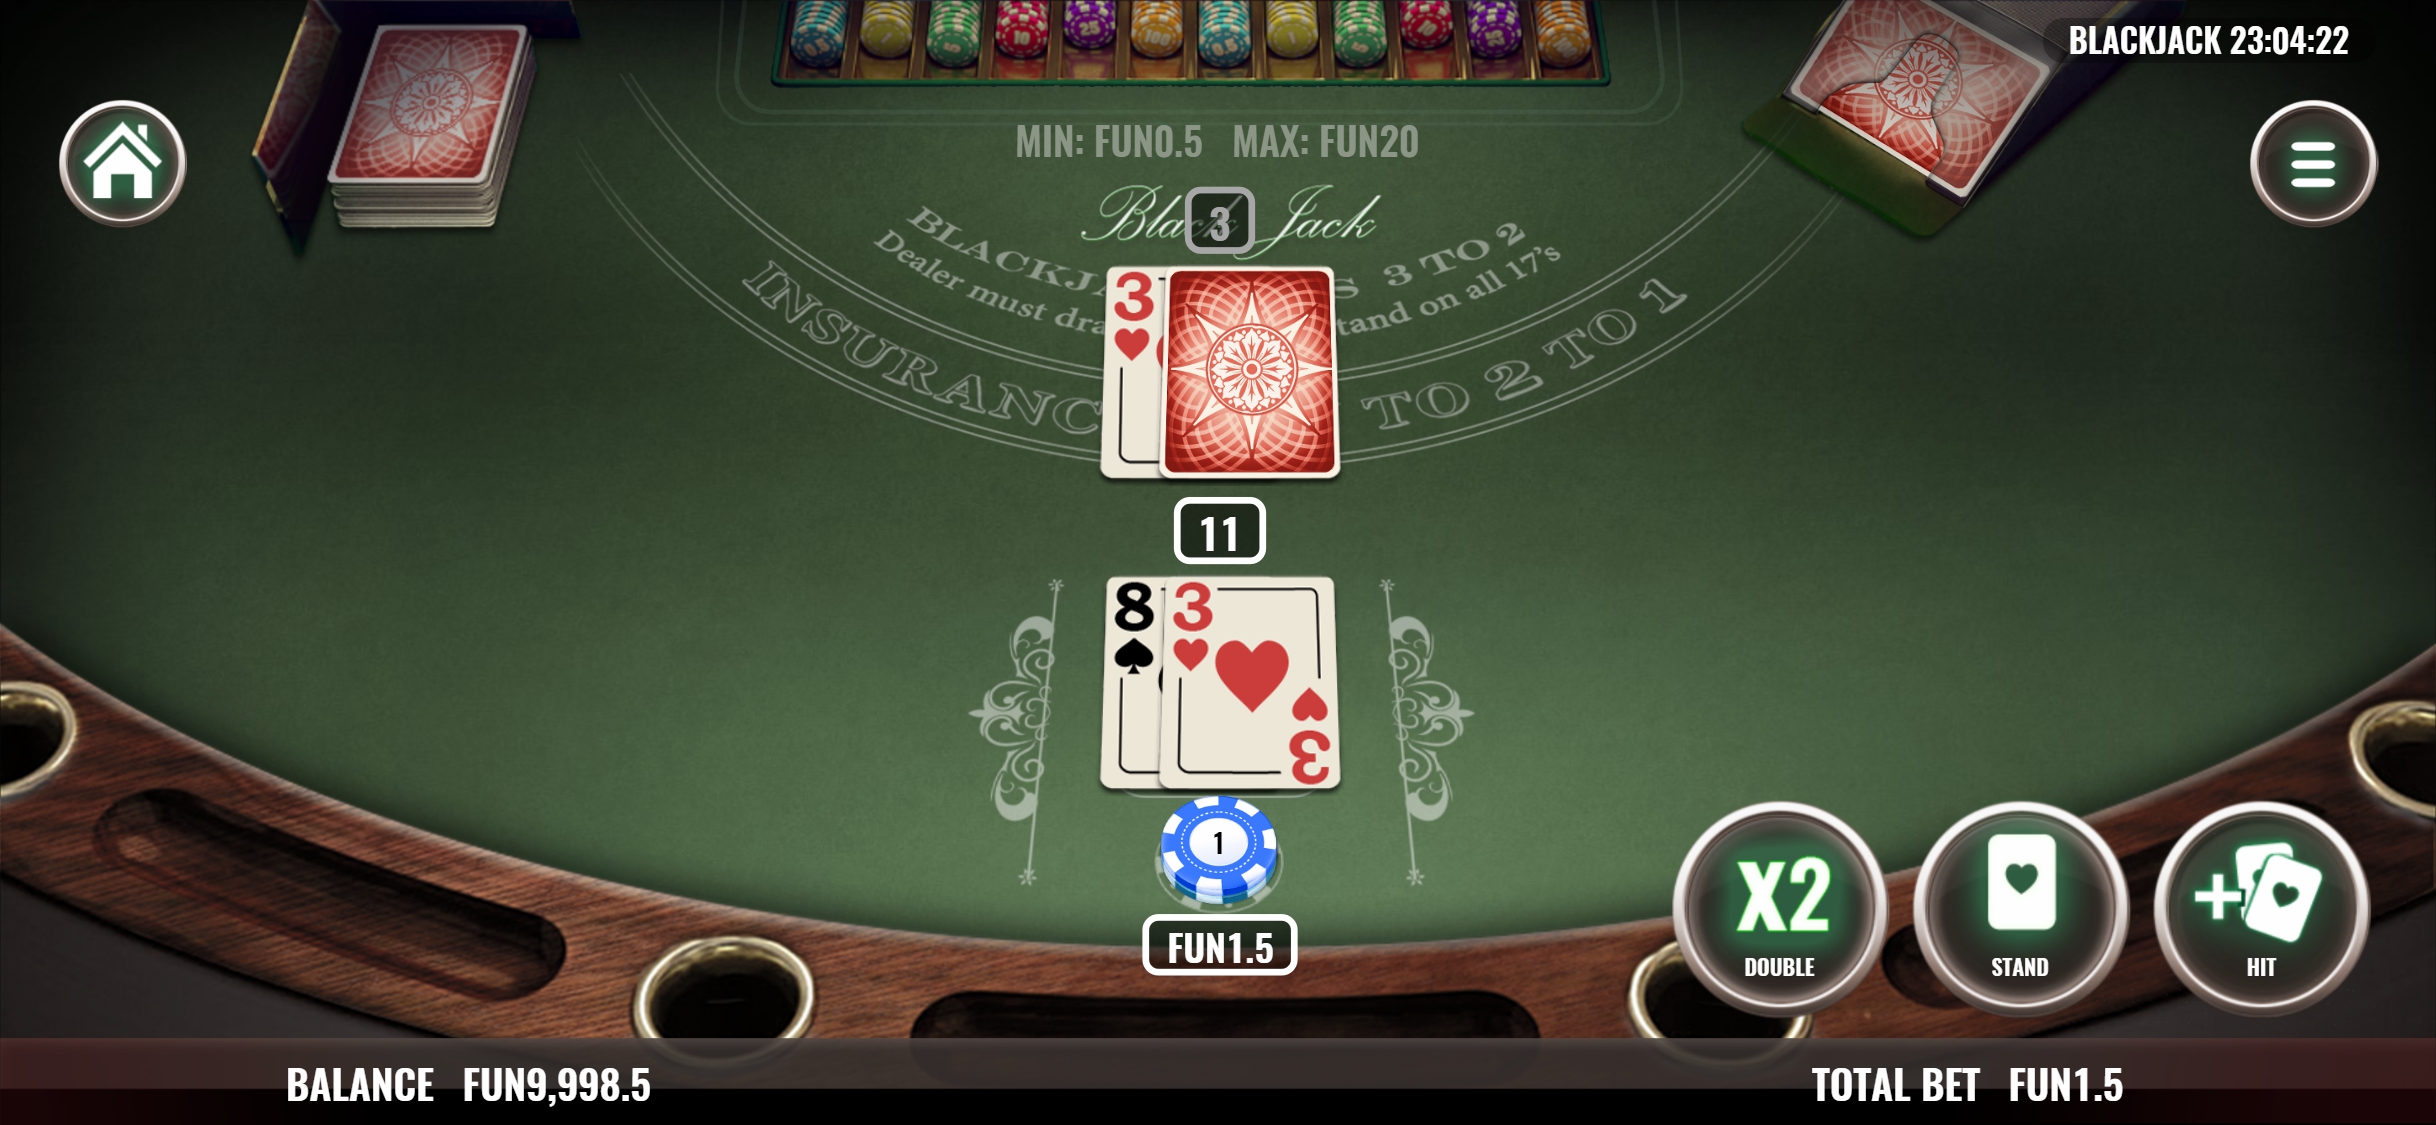 mBit Casino Mobile Slots Review